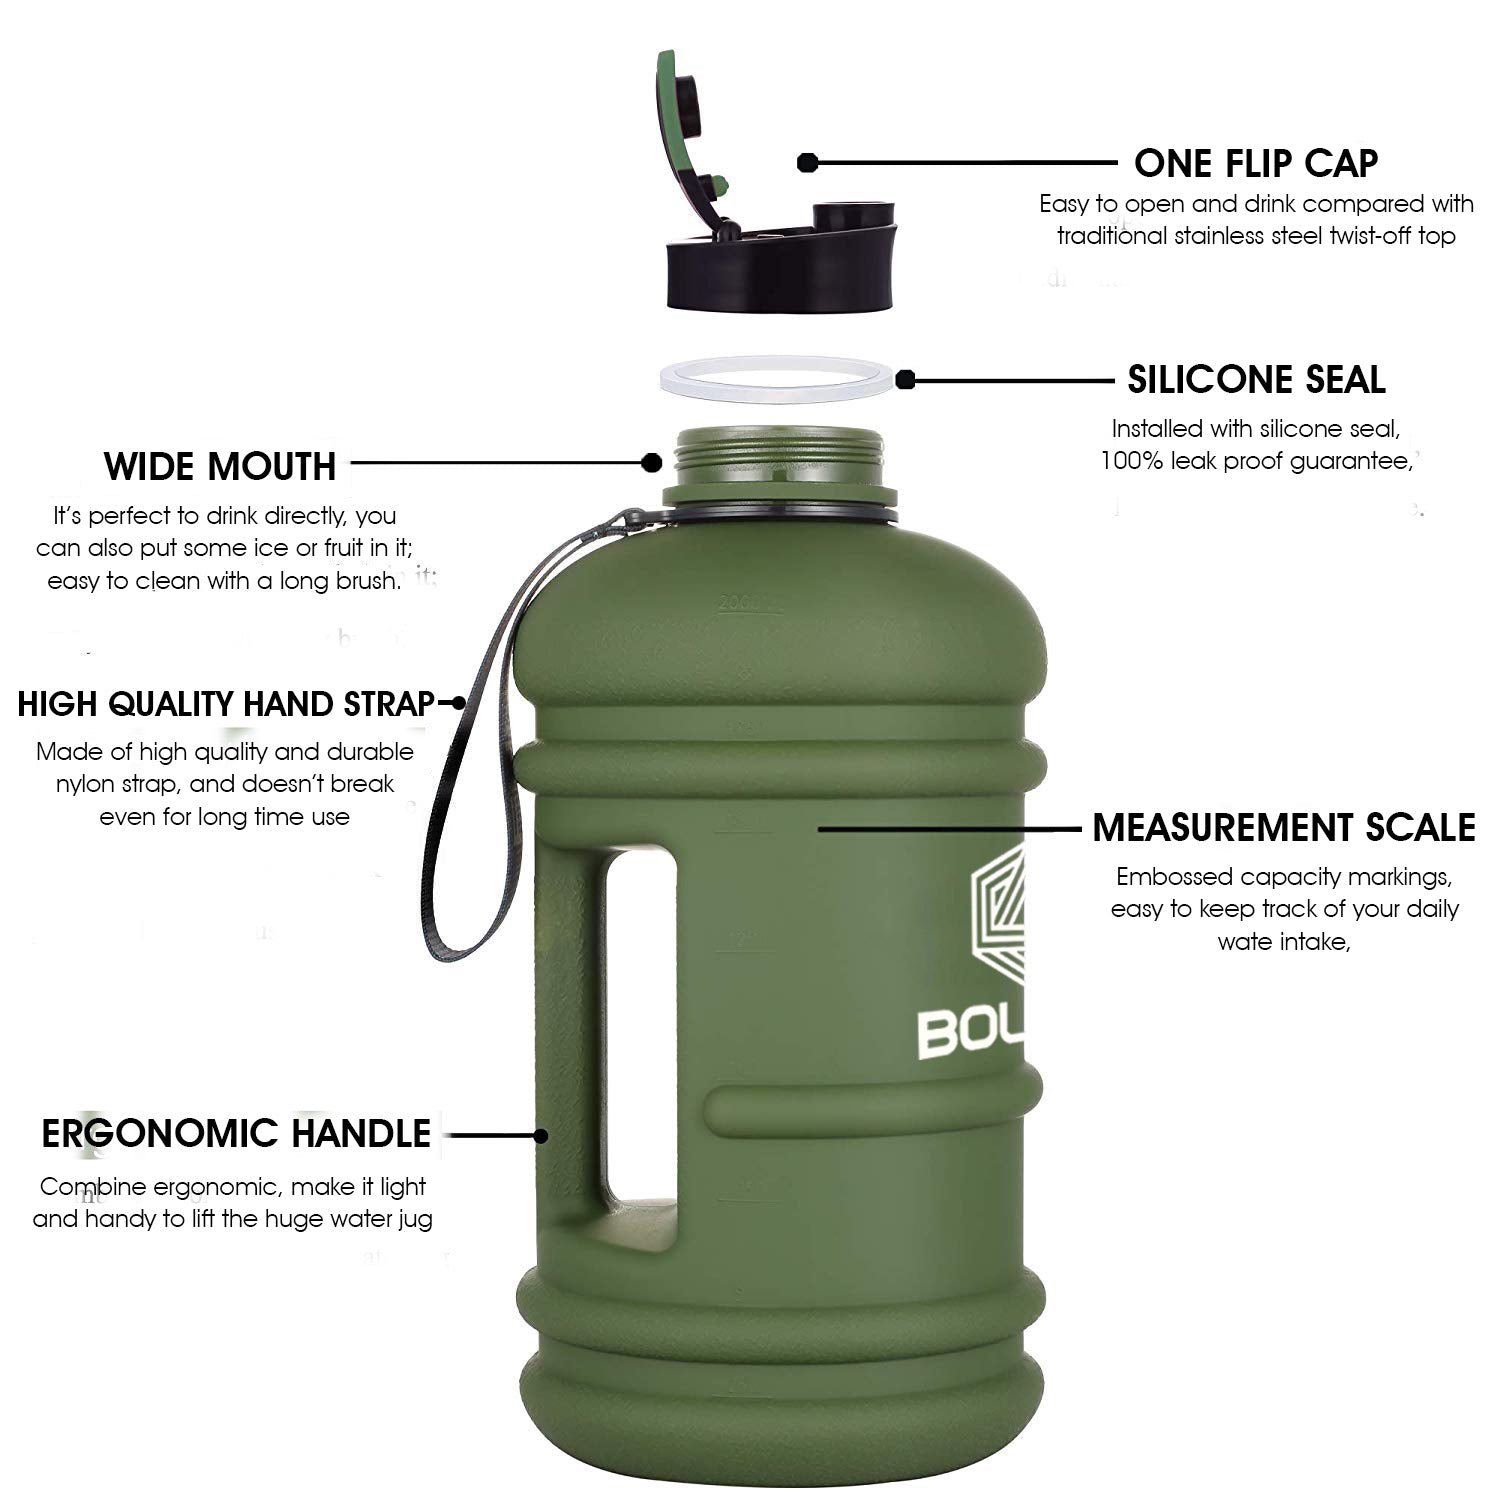 Buy Boldfit Gym Gallon Bottle for Men 2 Litre water bottle for Gym Workout  Motivational Sipper Bottle Online at Best Prices in India - JioMart.